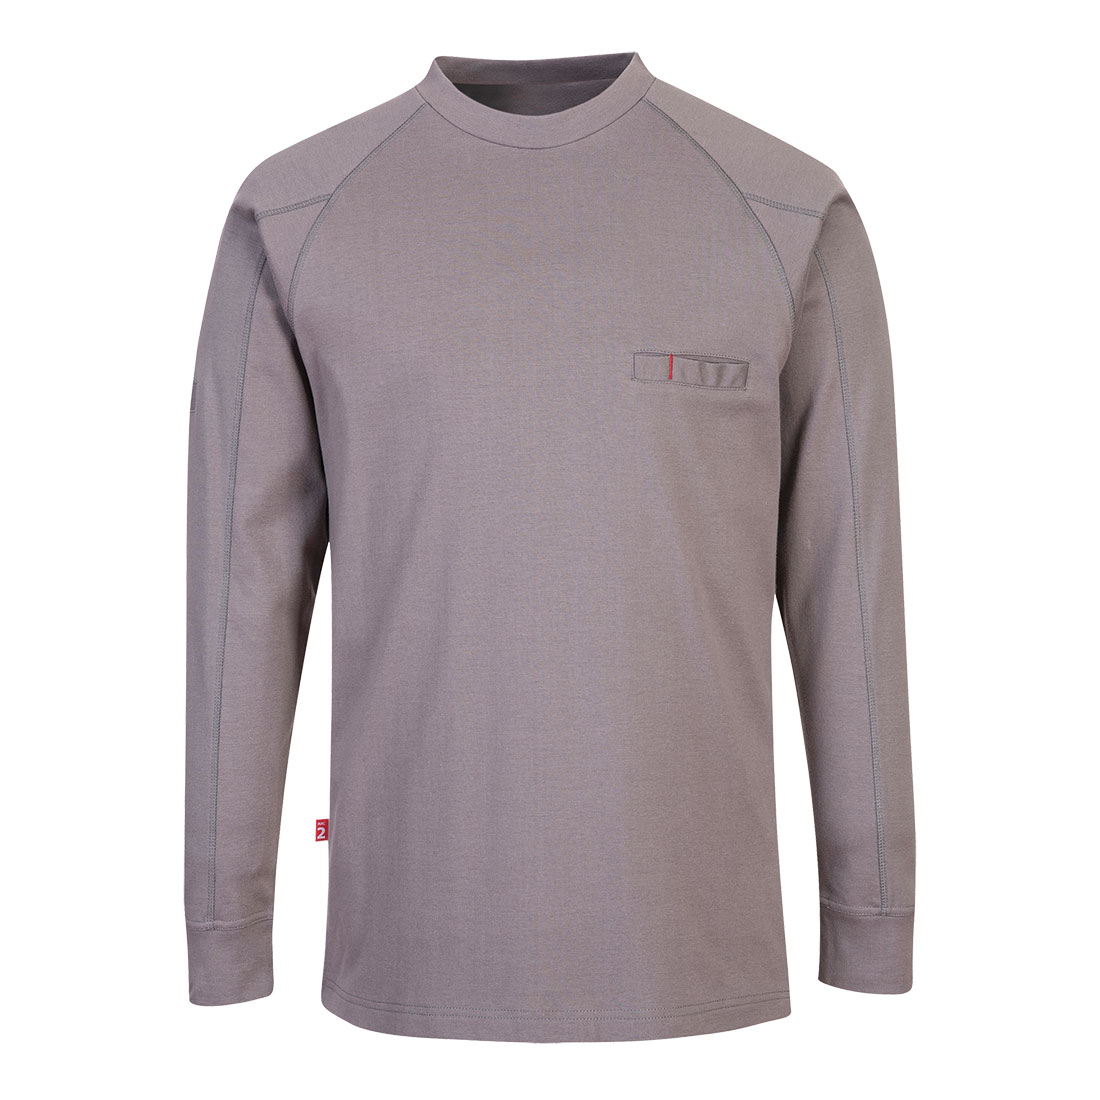 FR33 Portwest® Bizflame® Knit Flame-Resistant Anti-Static Crew Neck Shirts - gray